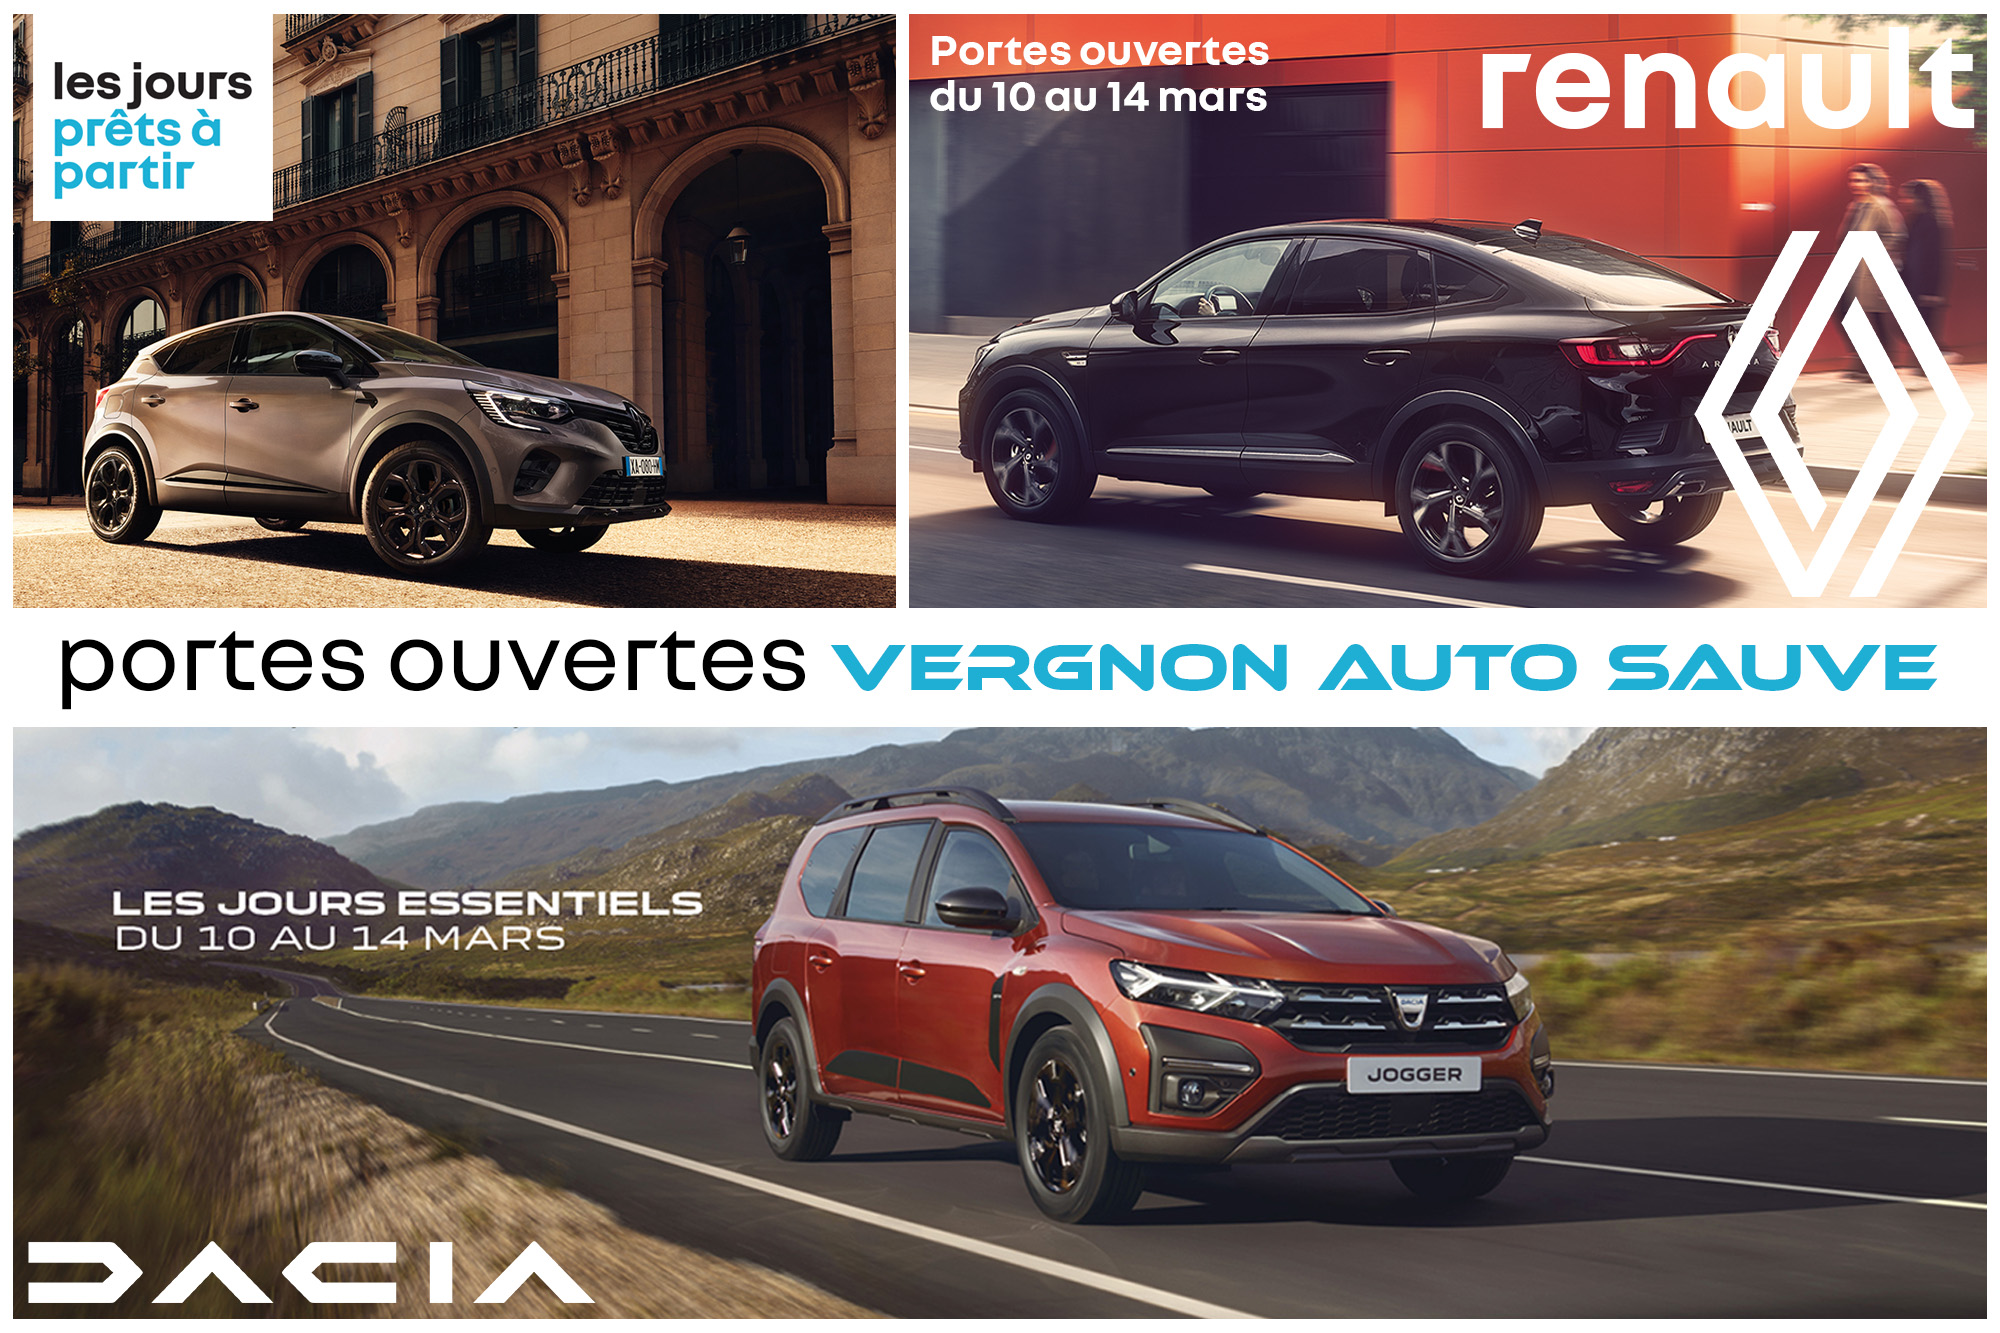 Portes ouvertes « Renault-Dacia » Sauve !